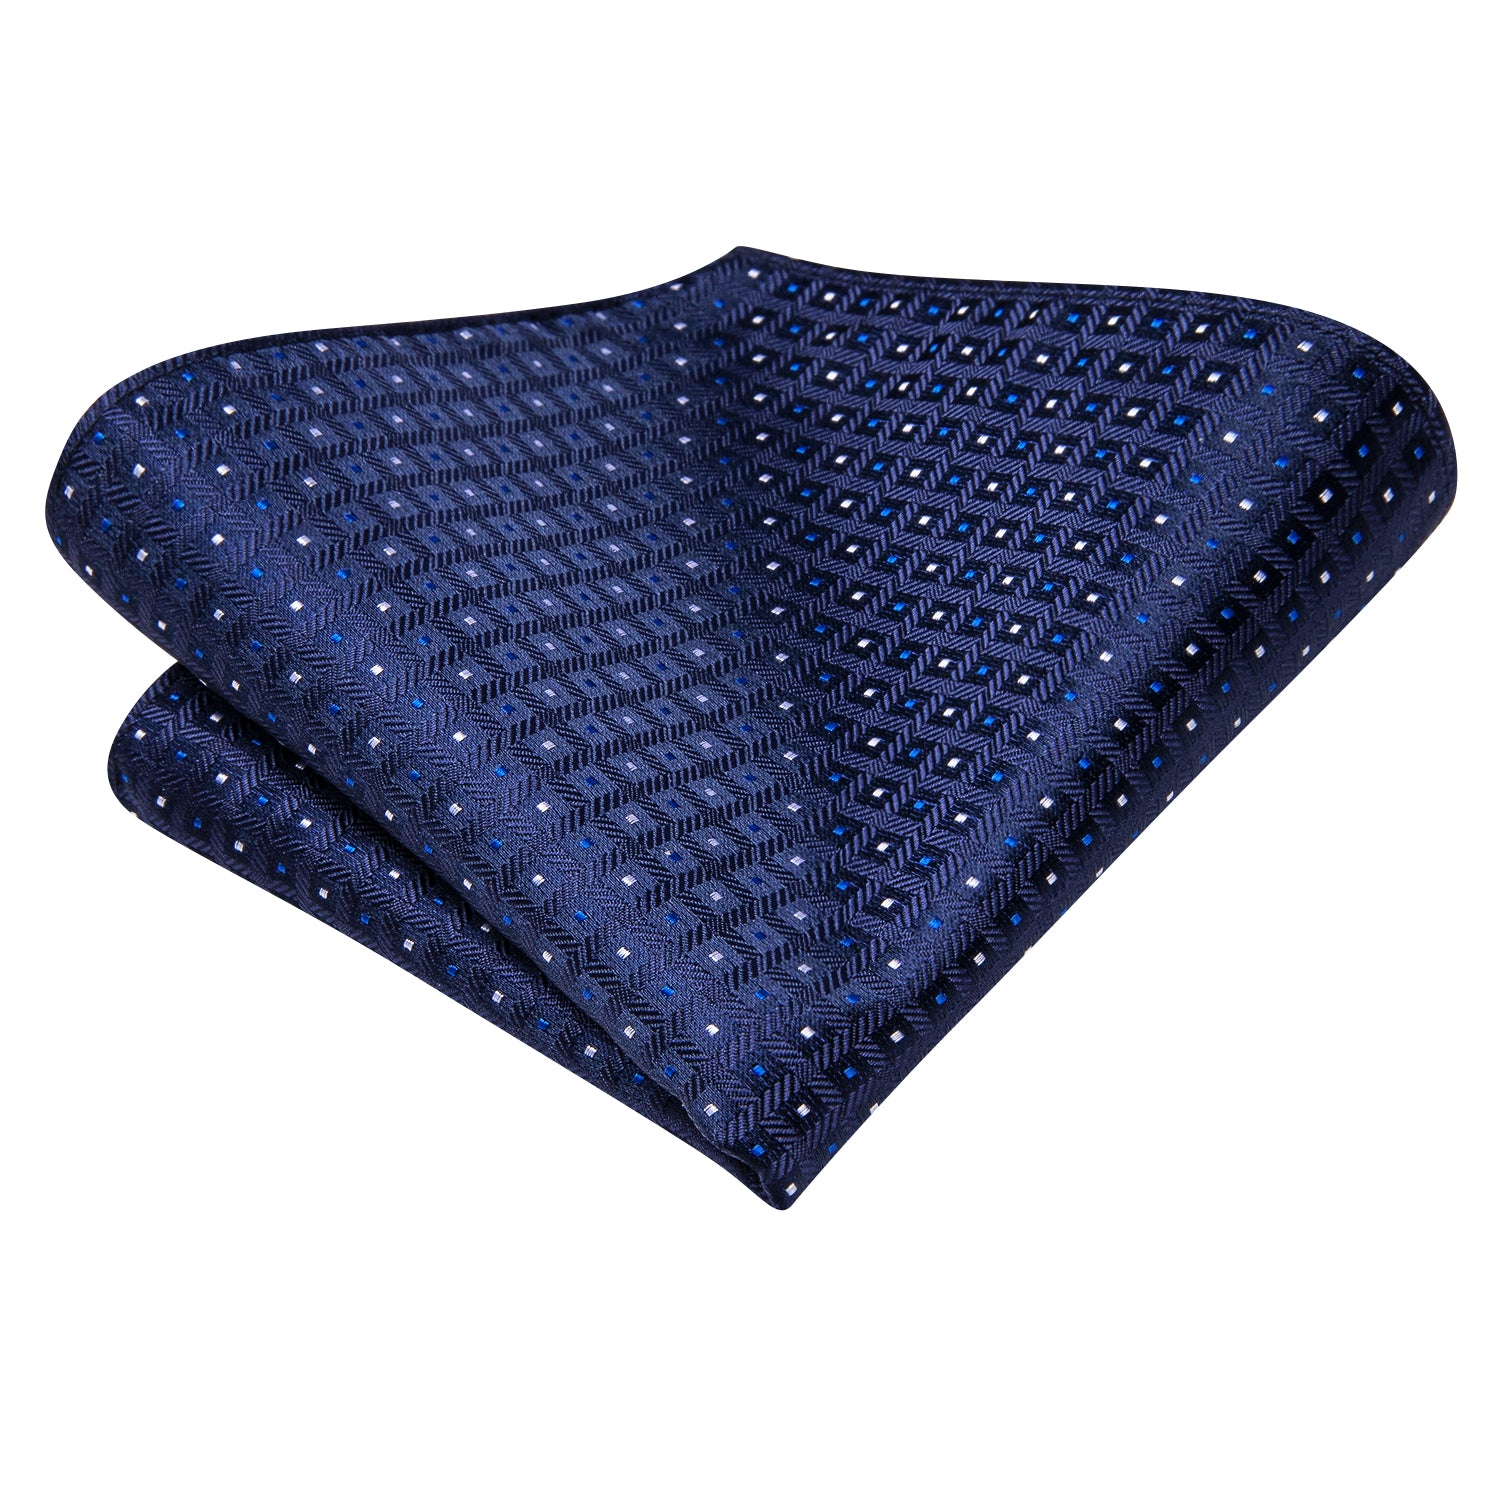 Hi-Tie Deep Blue Novelty Men's Tie Pocket Square Cufflinks Set